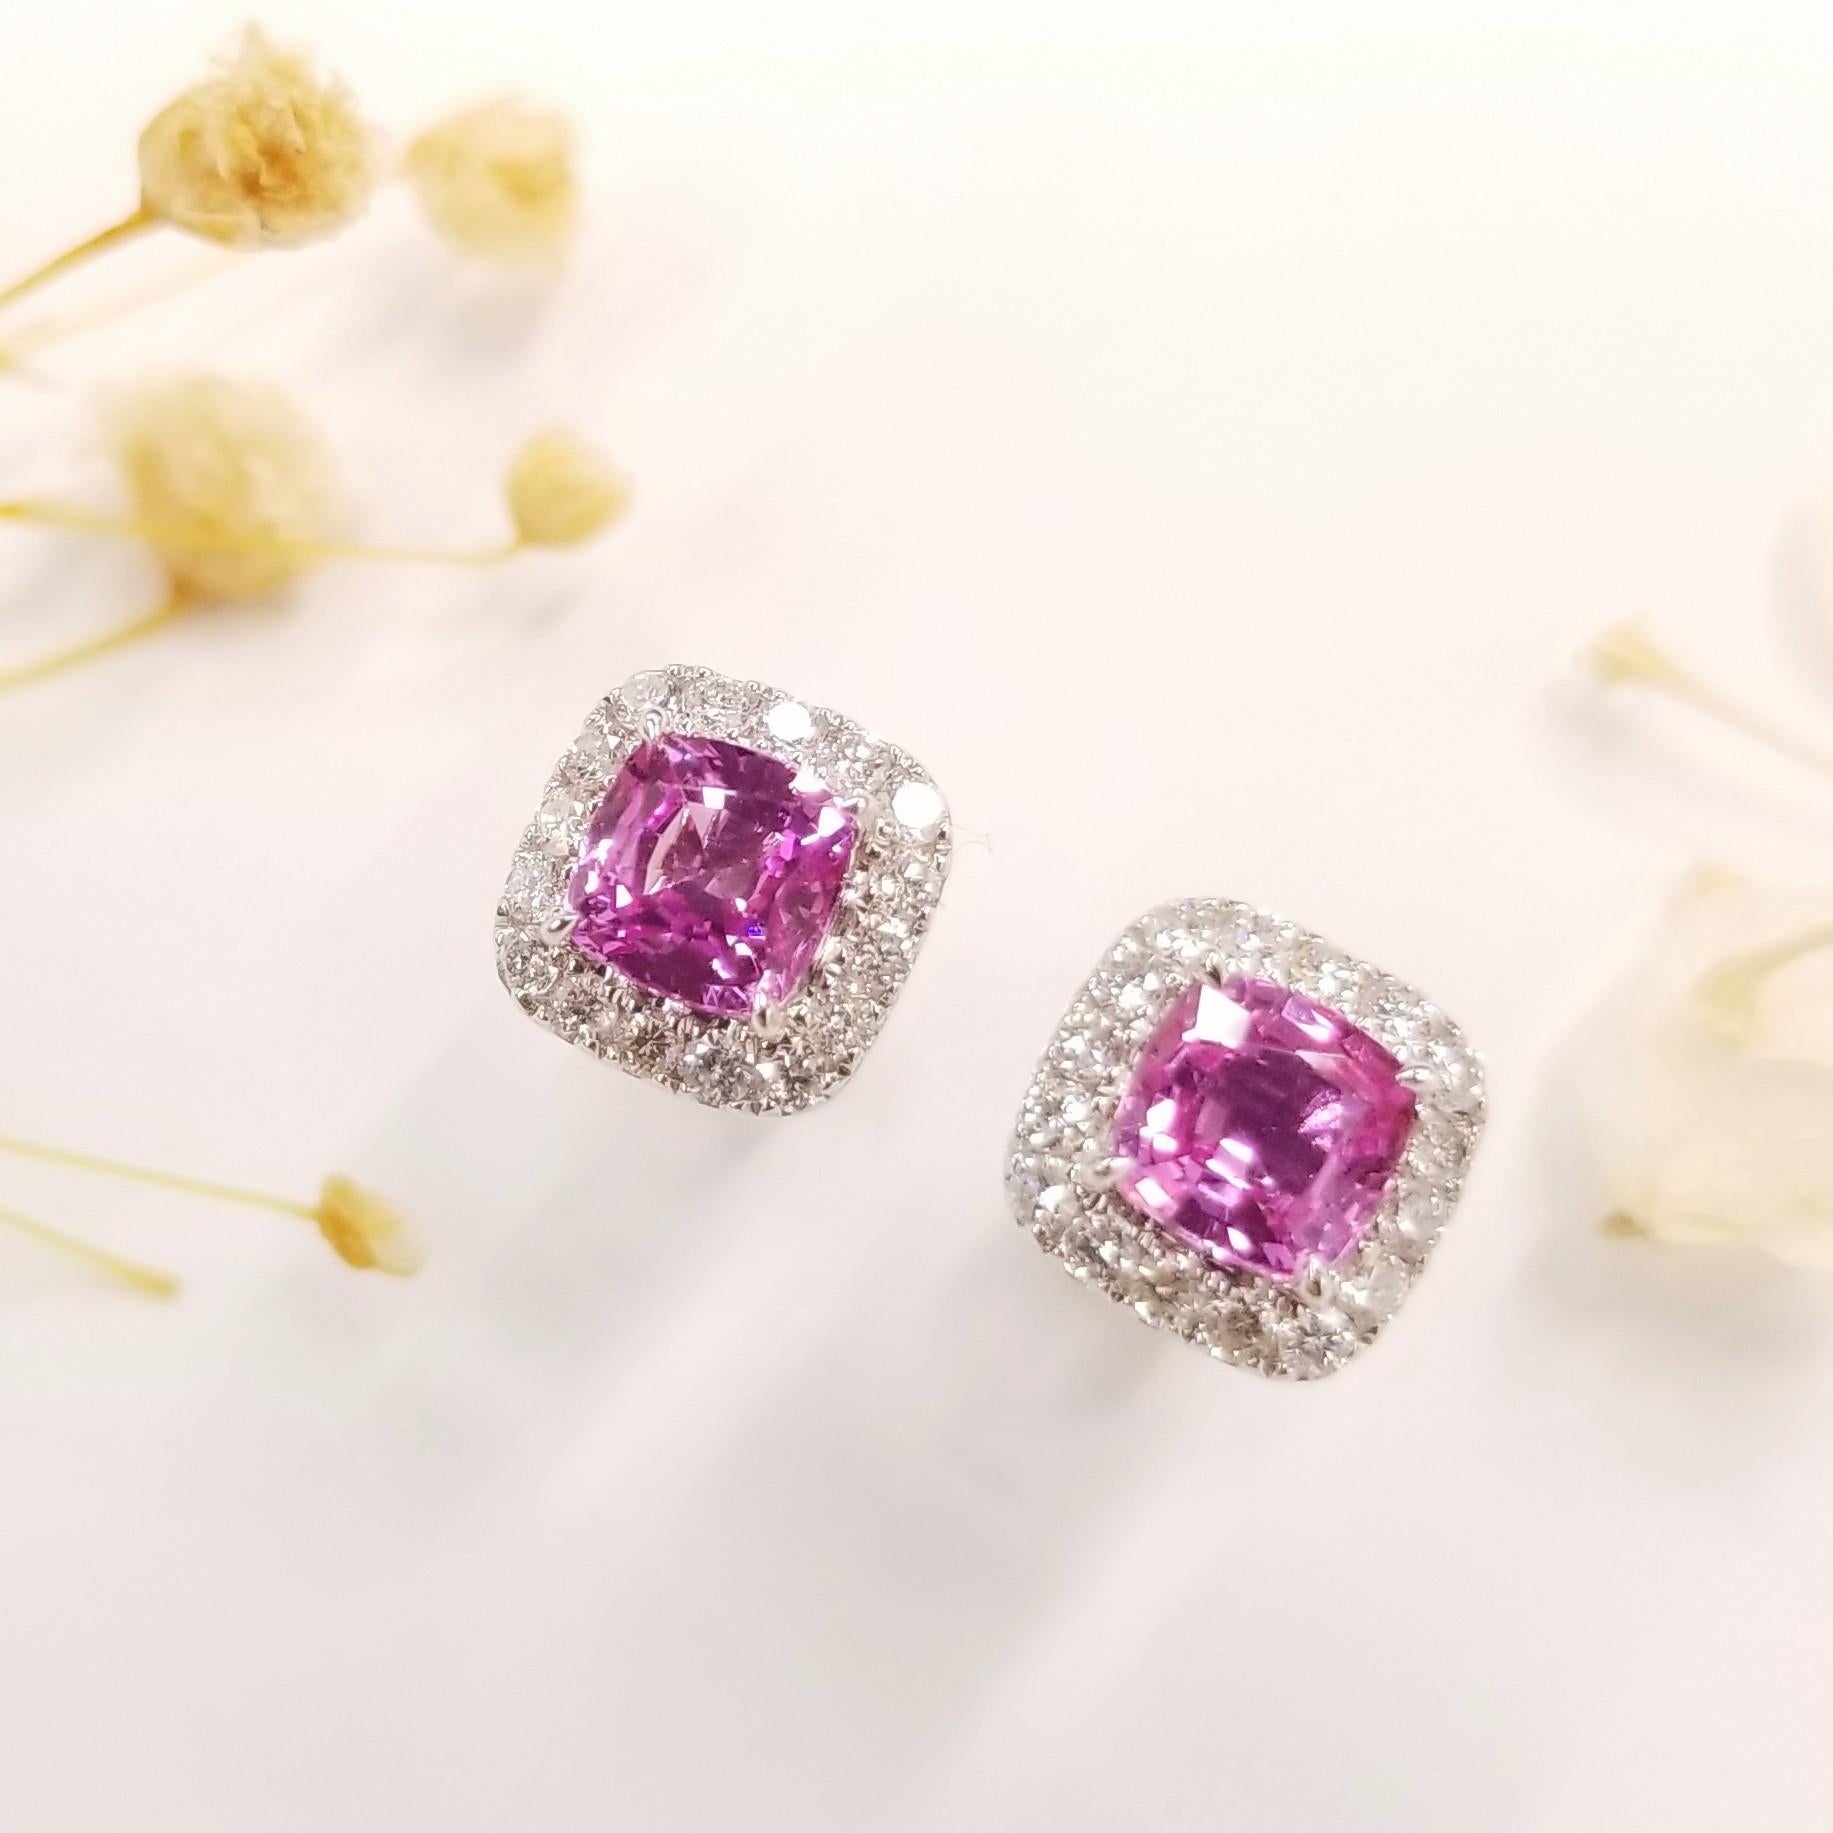 Modern IGI Certified 1.78 Carat Pink Sapphire & Diamond Earring in 18K White Gold For Sale